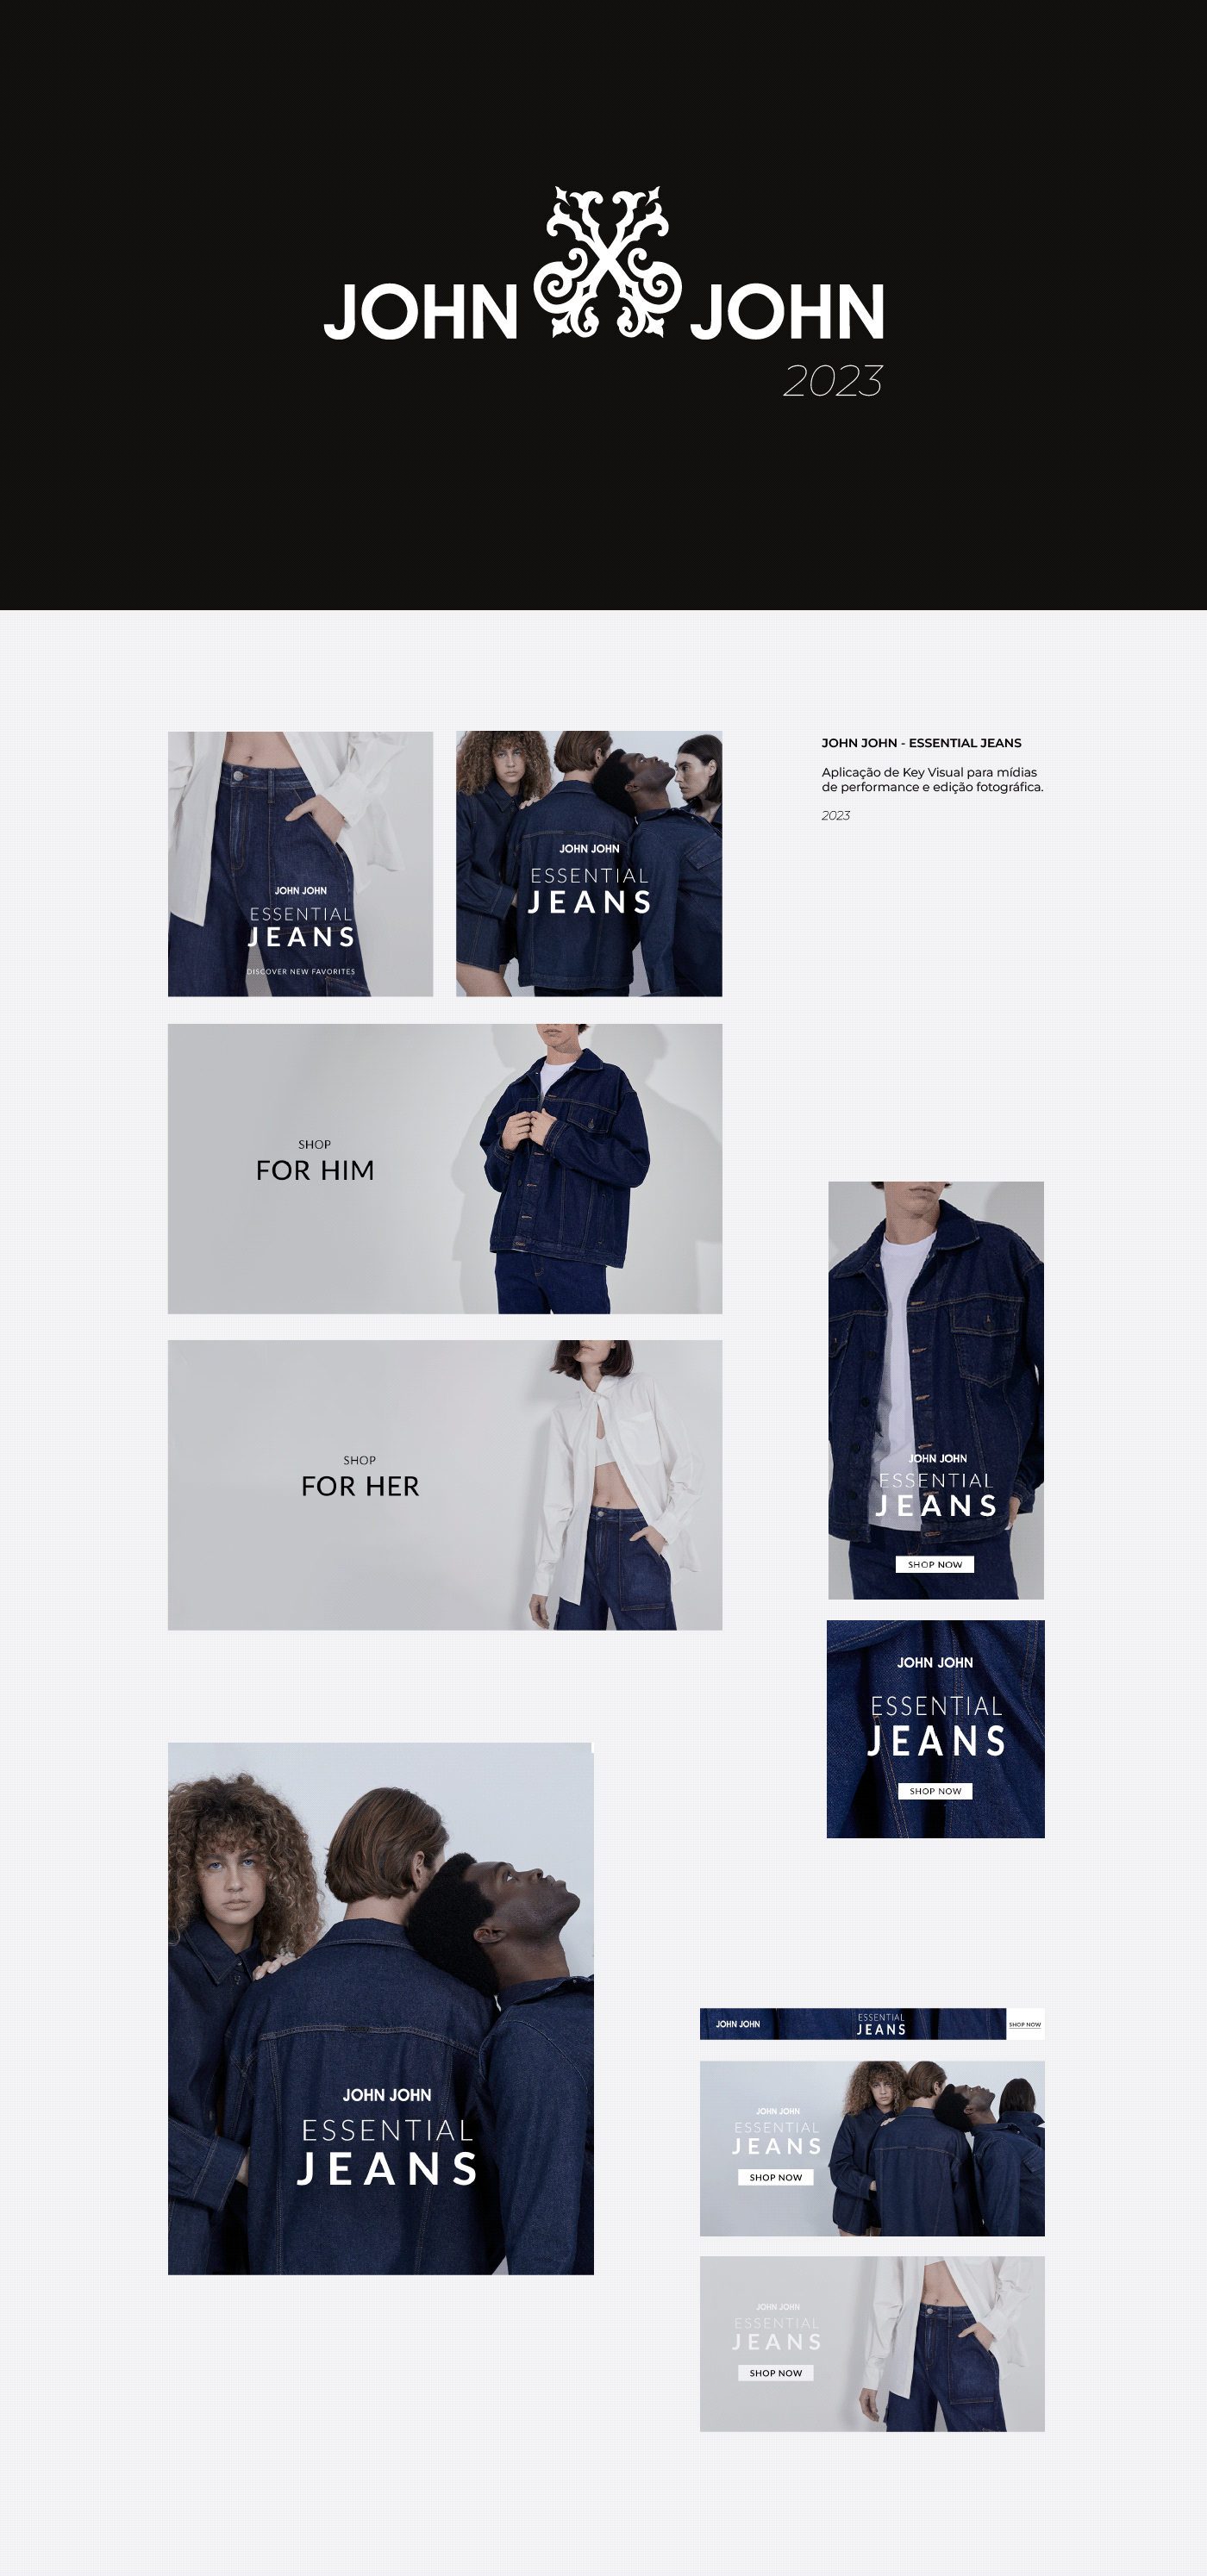 John John Fashion  moda jeans edição Performance marketing   brand identity Logo Design visual identity